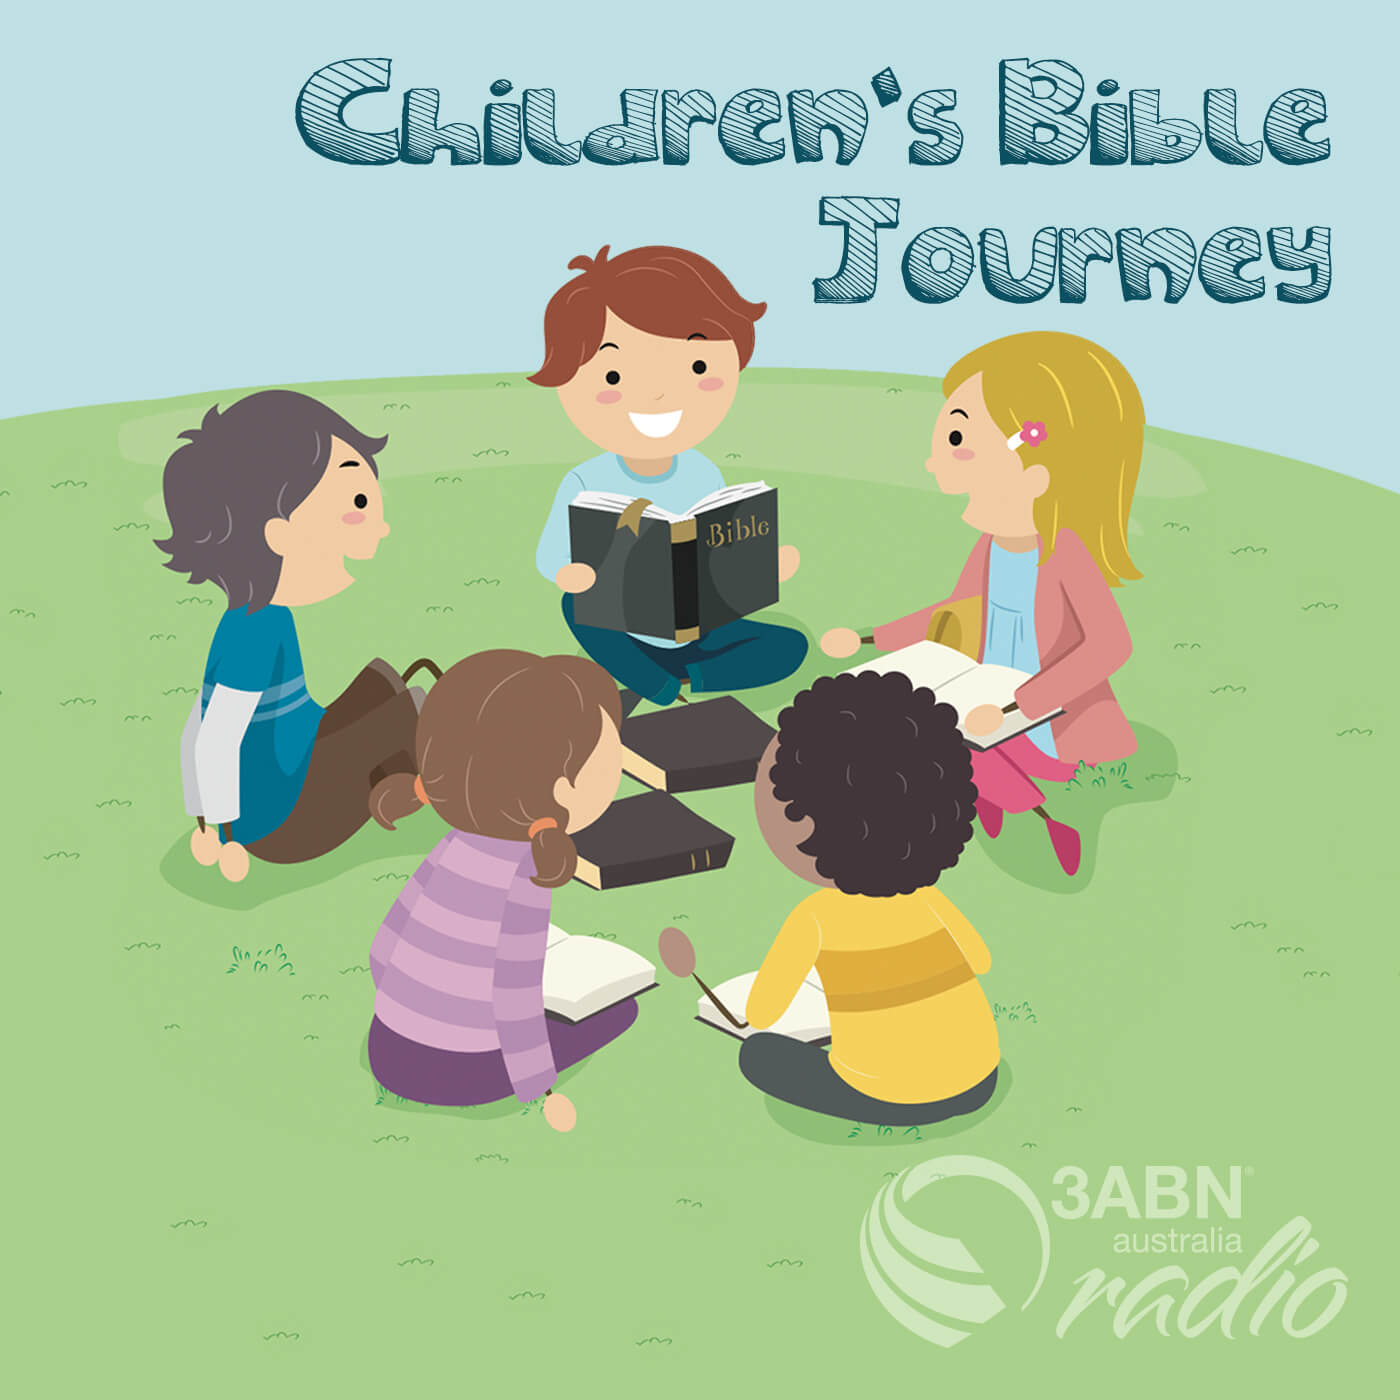 Children's Bible Journey - 2088